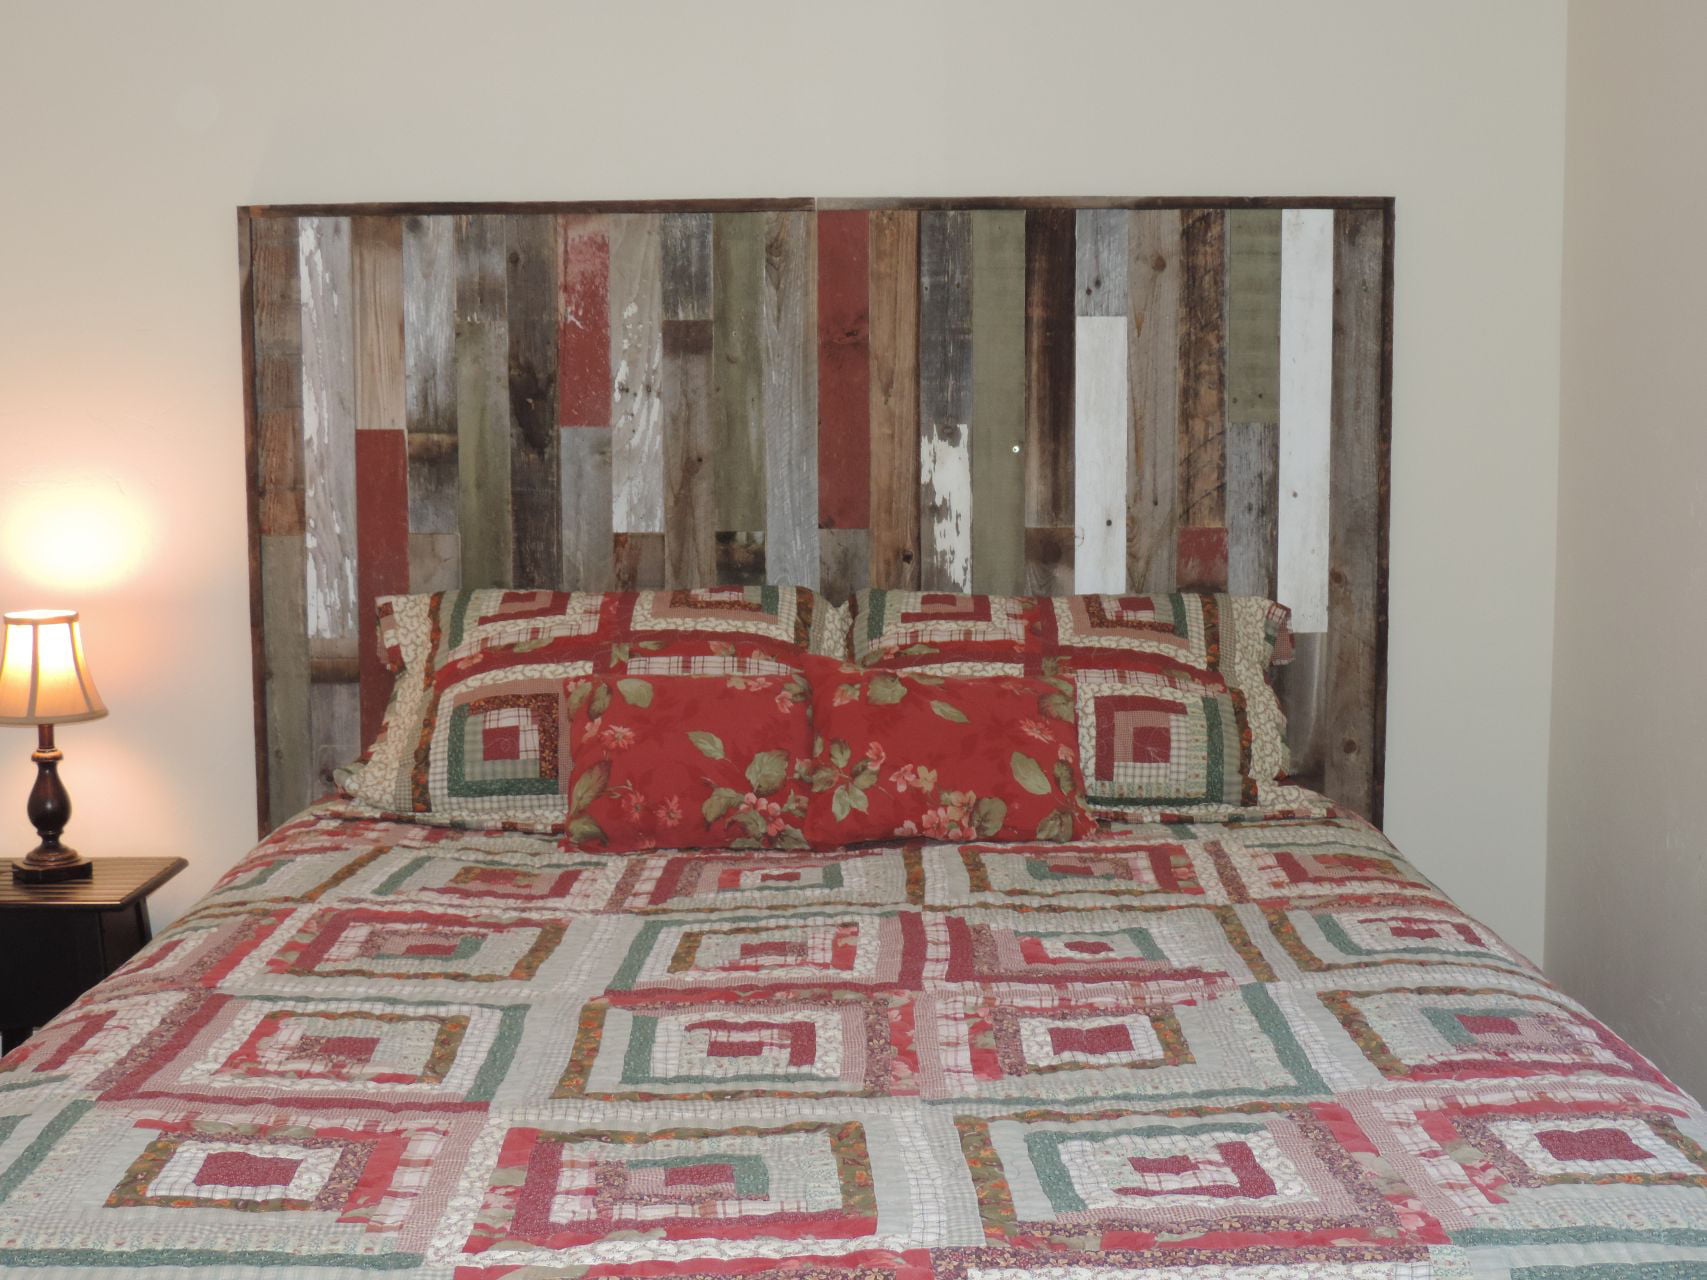 Rustic Barnwood Bedroom Furniture, Reclaimed Wood King Size Bed